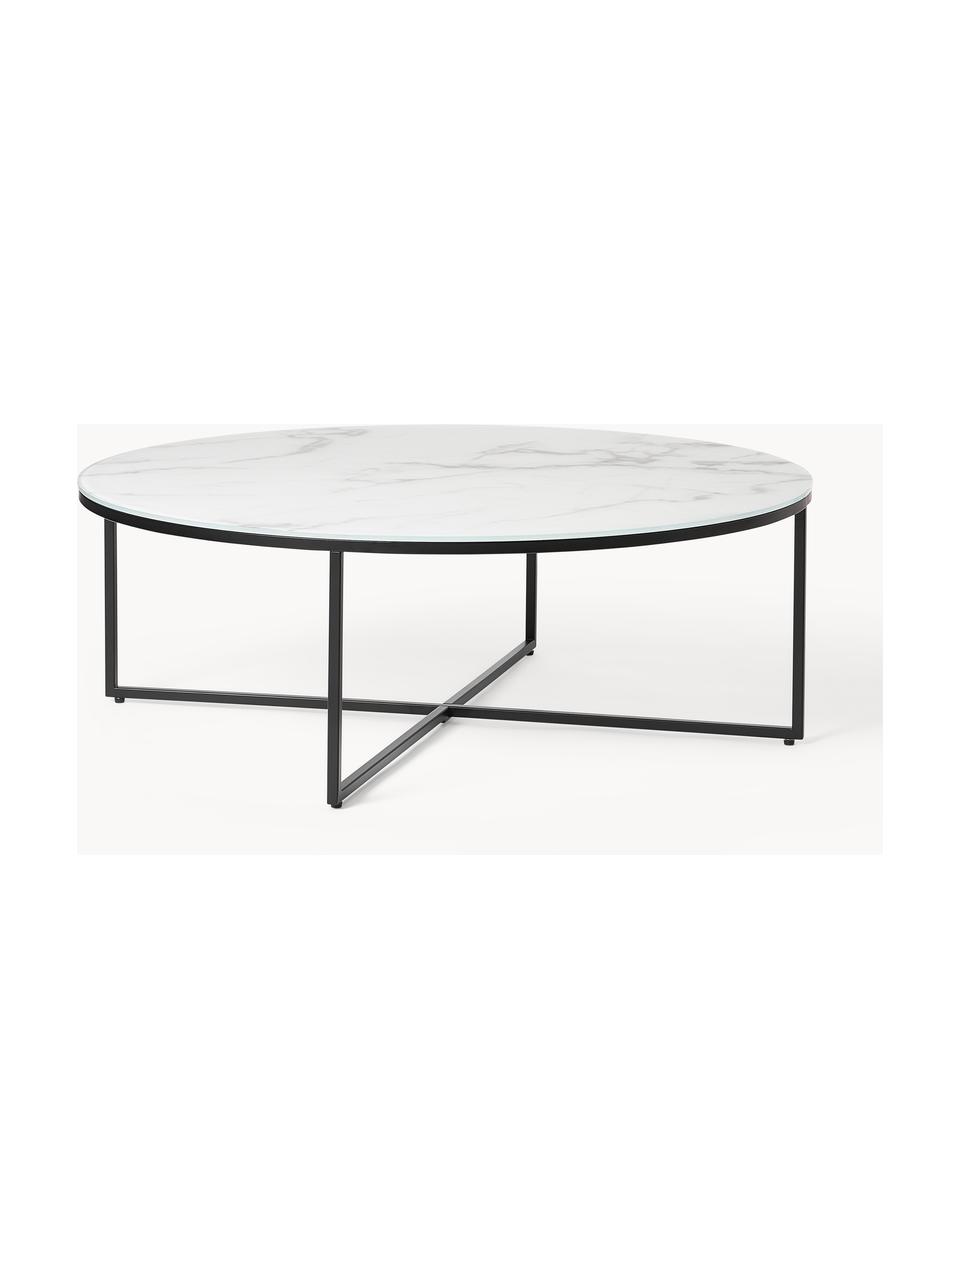 Table basse ronde XL avec plateau look marbre Antigua, Blanc look marbre, noir, Ø 100 cm